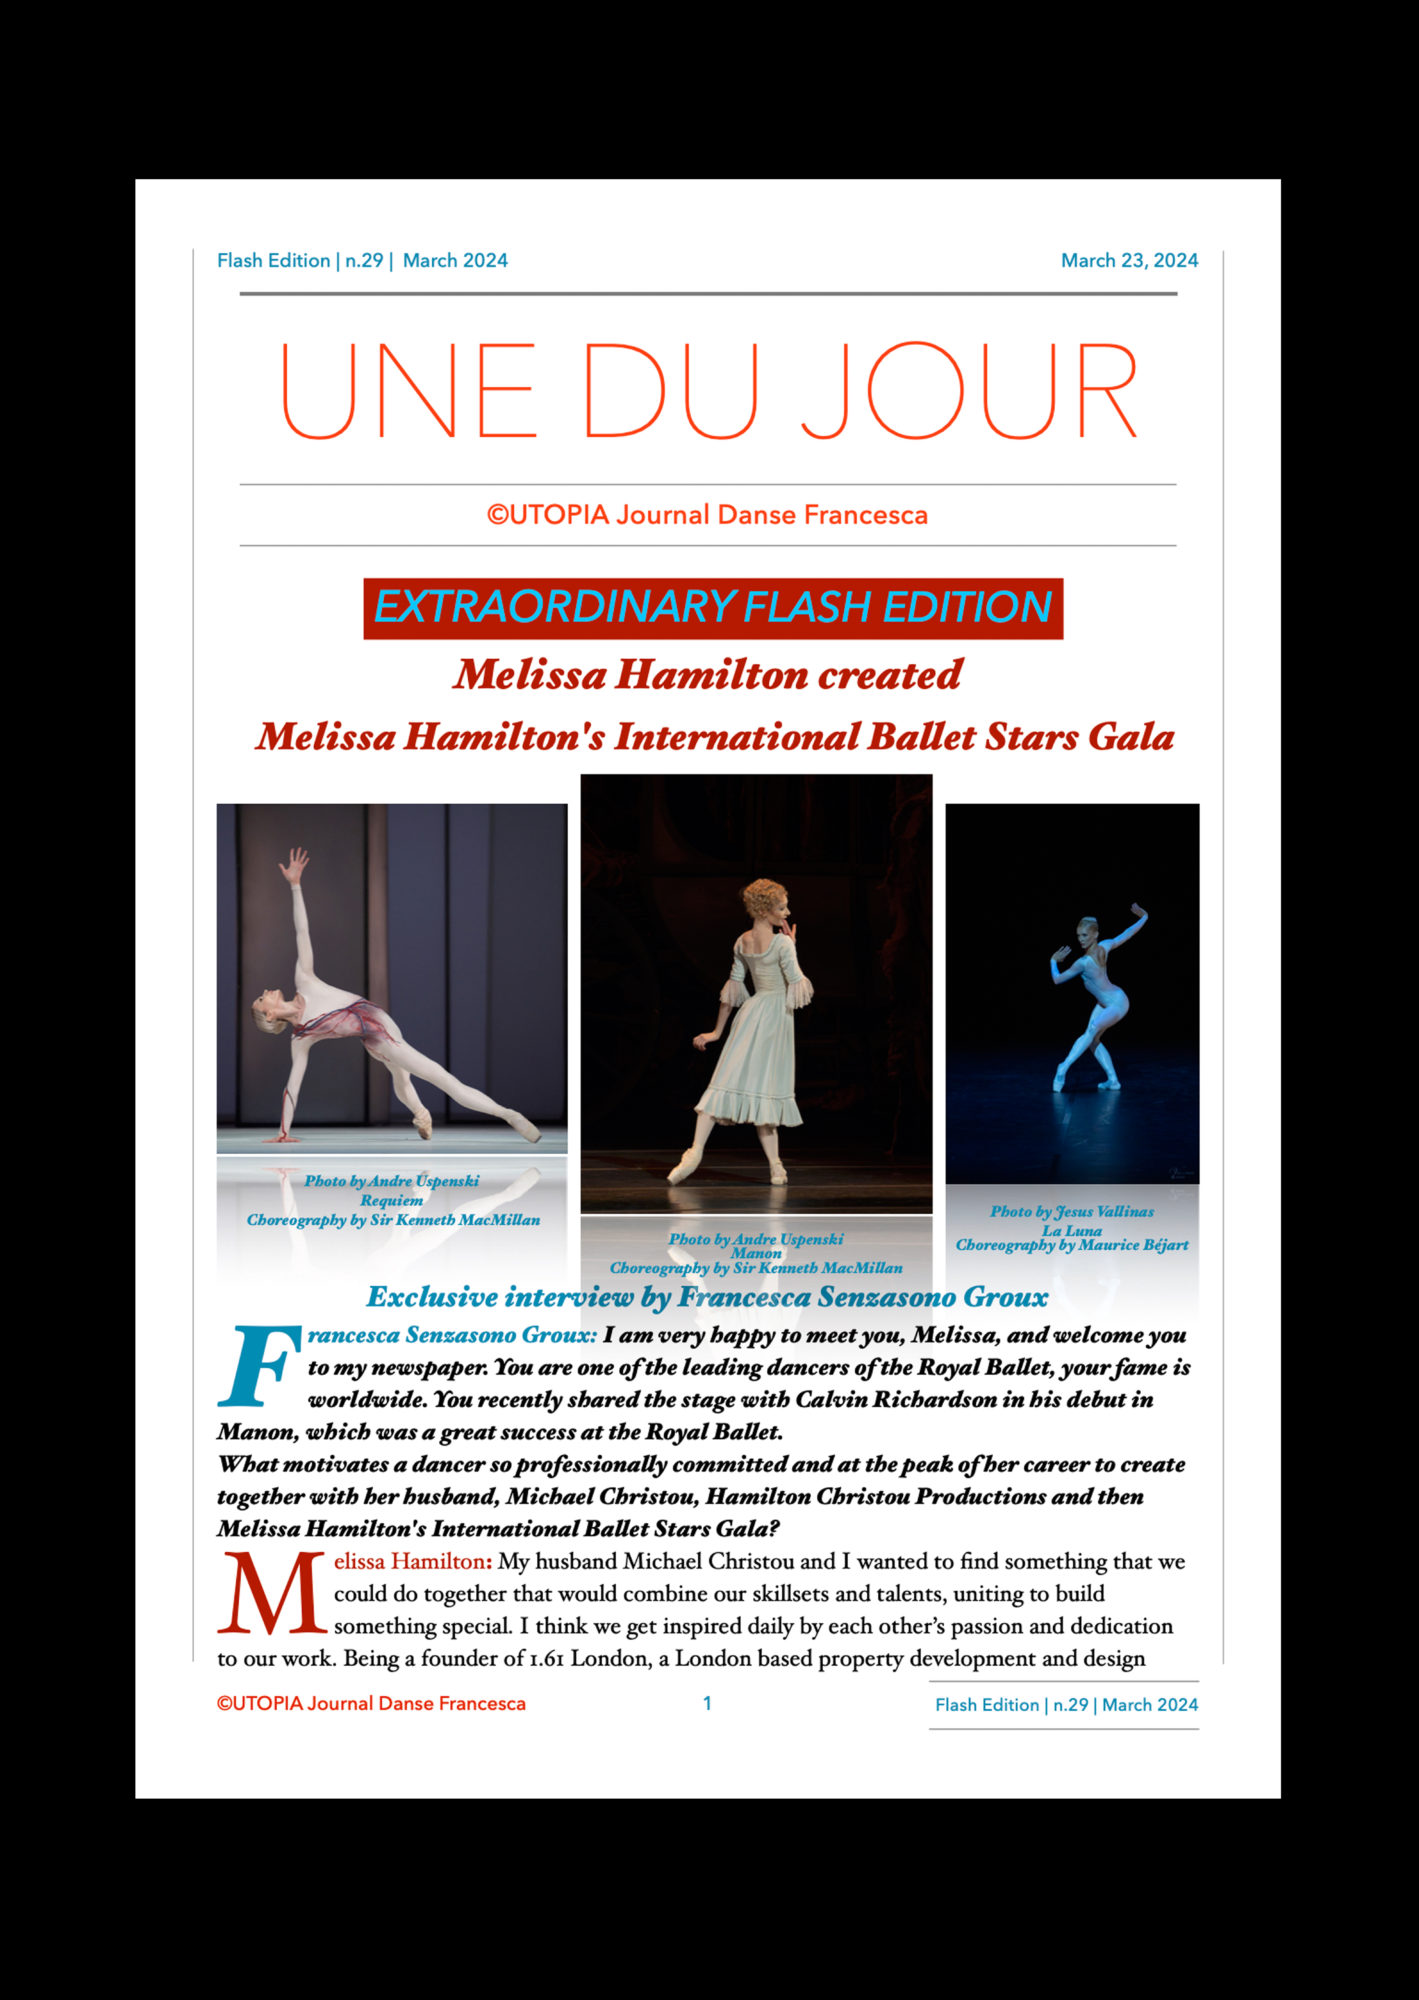 ©UTOPIA Journal Danse Francesca Extraordinary Flash Edition n.29 March 23, 2024 page 1